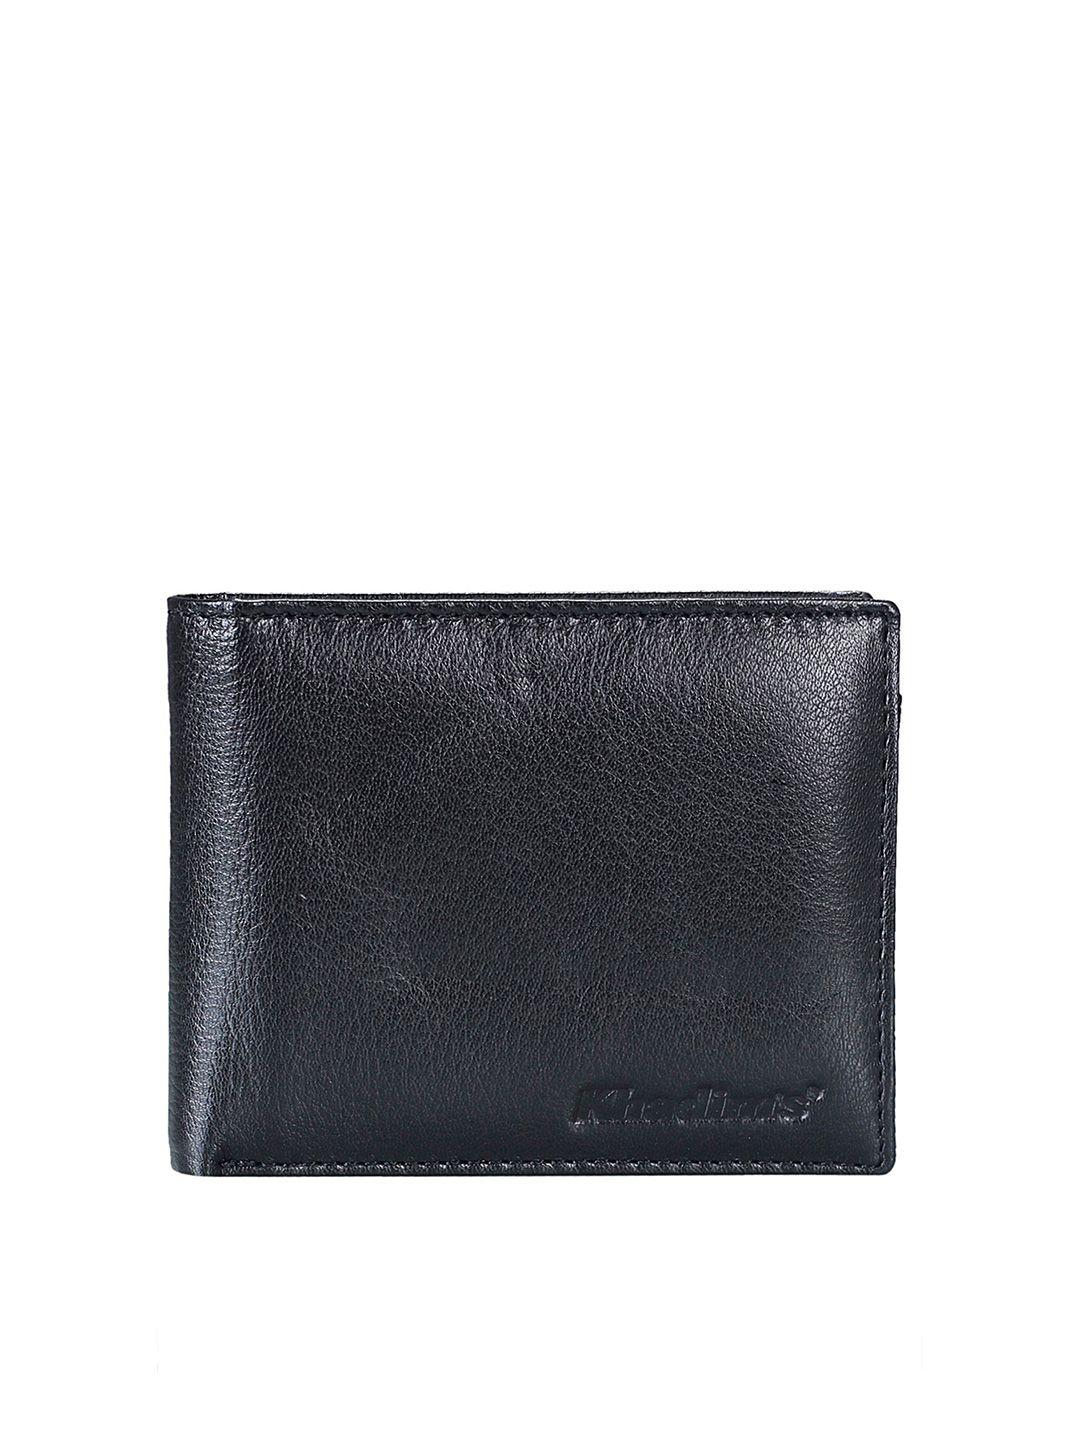 khadims men leather two fold wallet